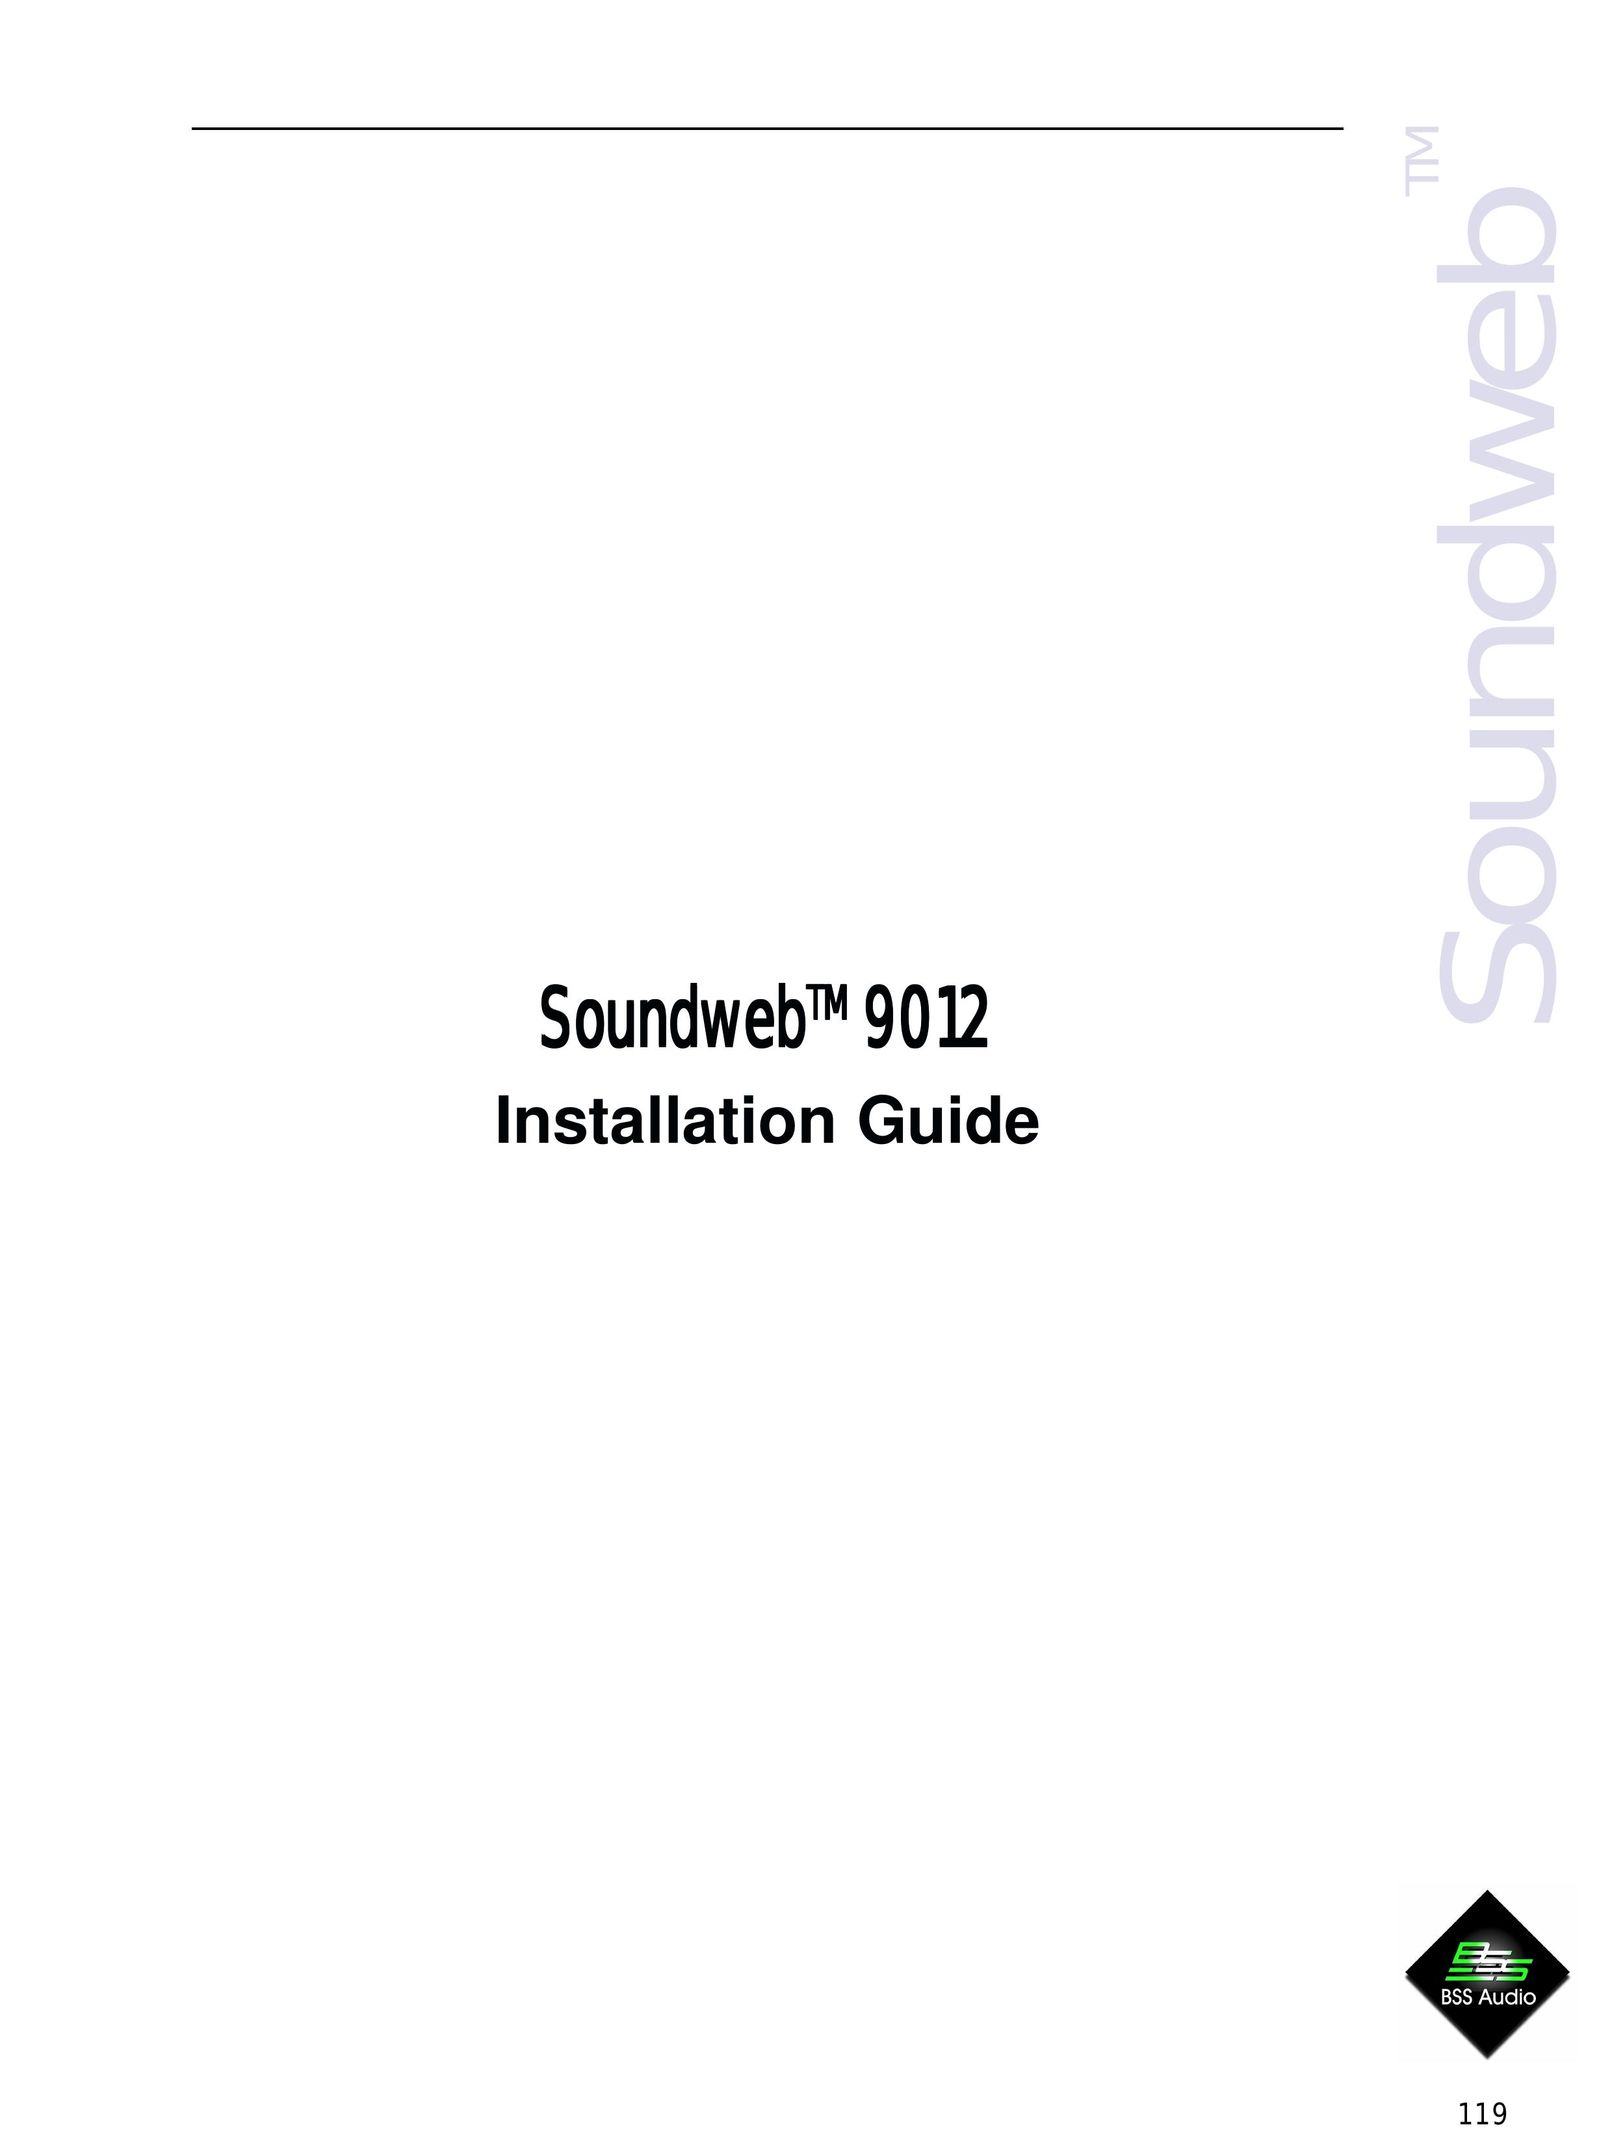 BSS Audio 9012 Speaker System User Manual